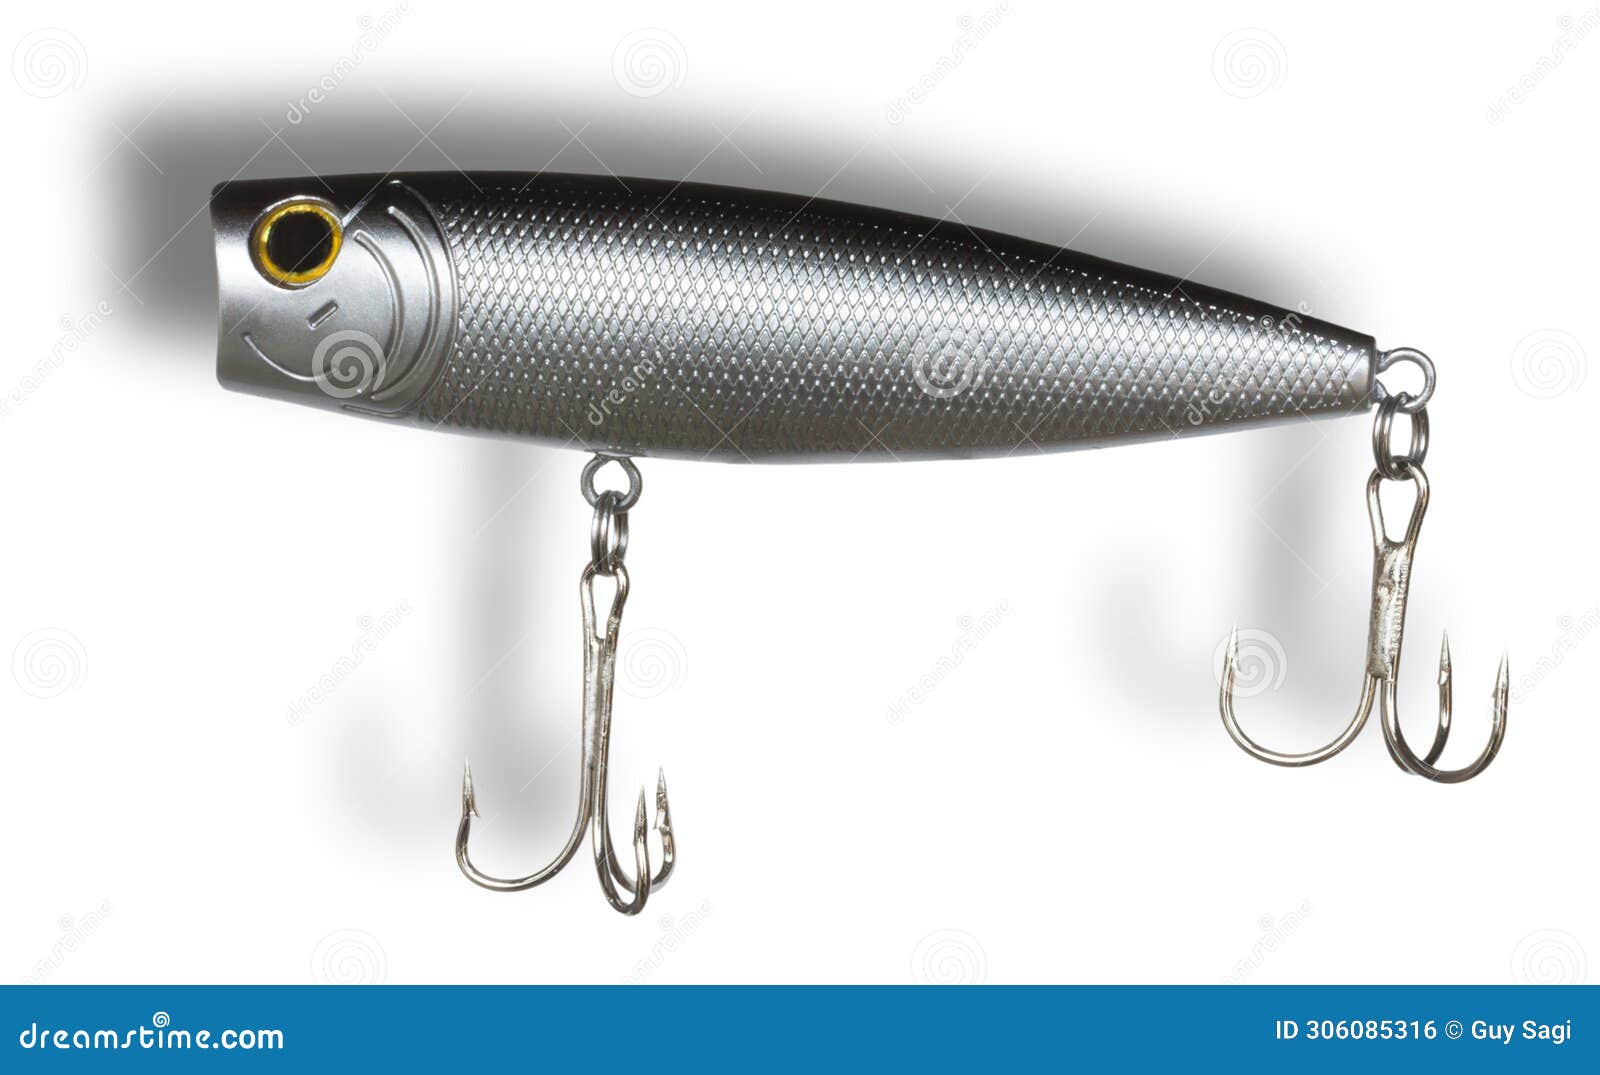 https://thumbs.dreamstime.com/z/dark-shadow-behind-long-silver-lure-freshwater-fishing-dropshadow-artificial-bait-color-pair-treble-306085316.jpg